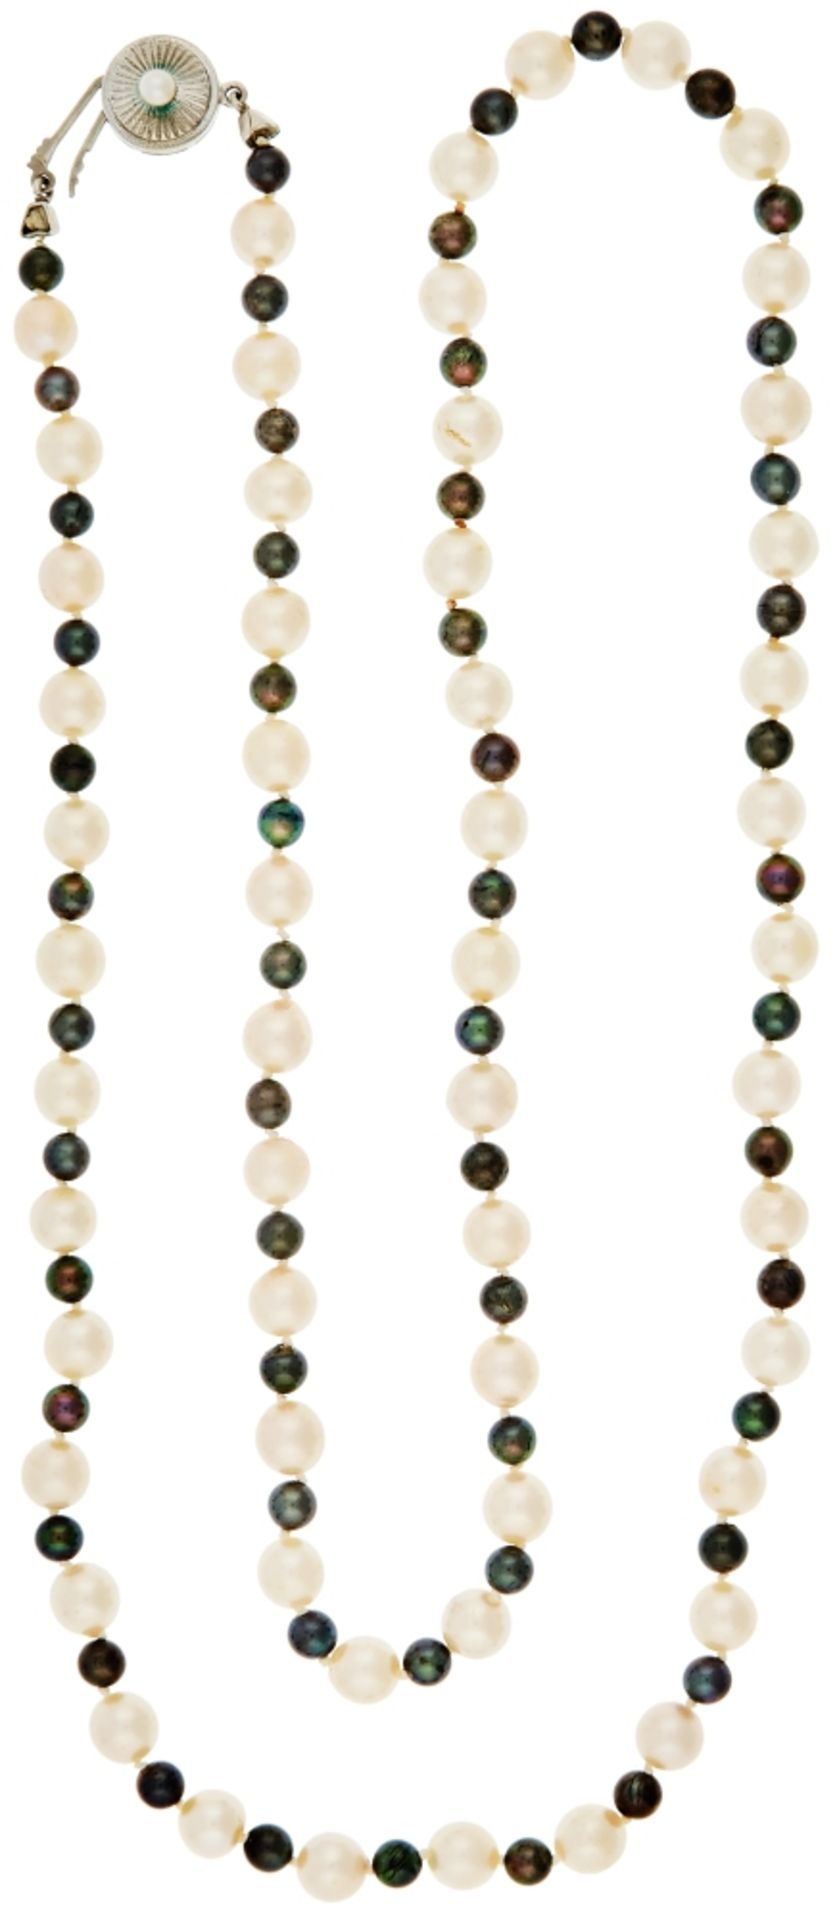 Bicolor-Zuchtperlenkette, Perlen einzeln geknotet, runde Schließe 835 Silber, punziert \JKa\, Perlen